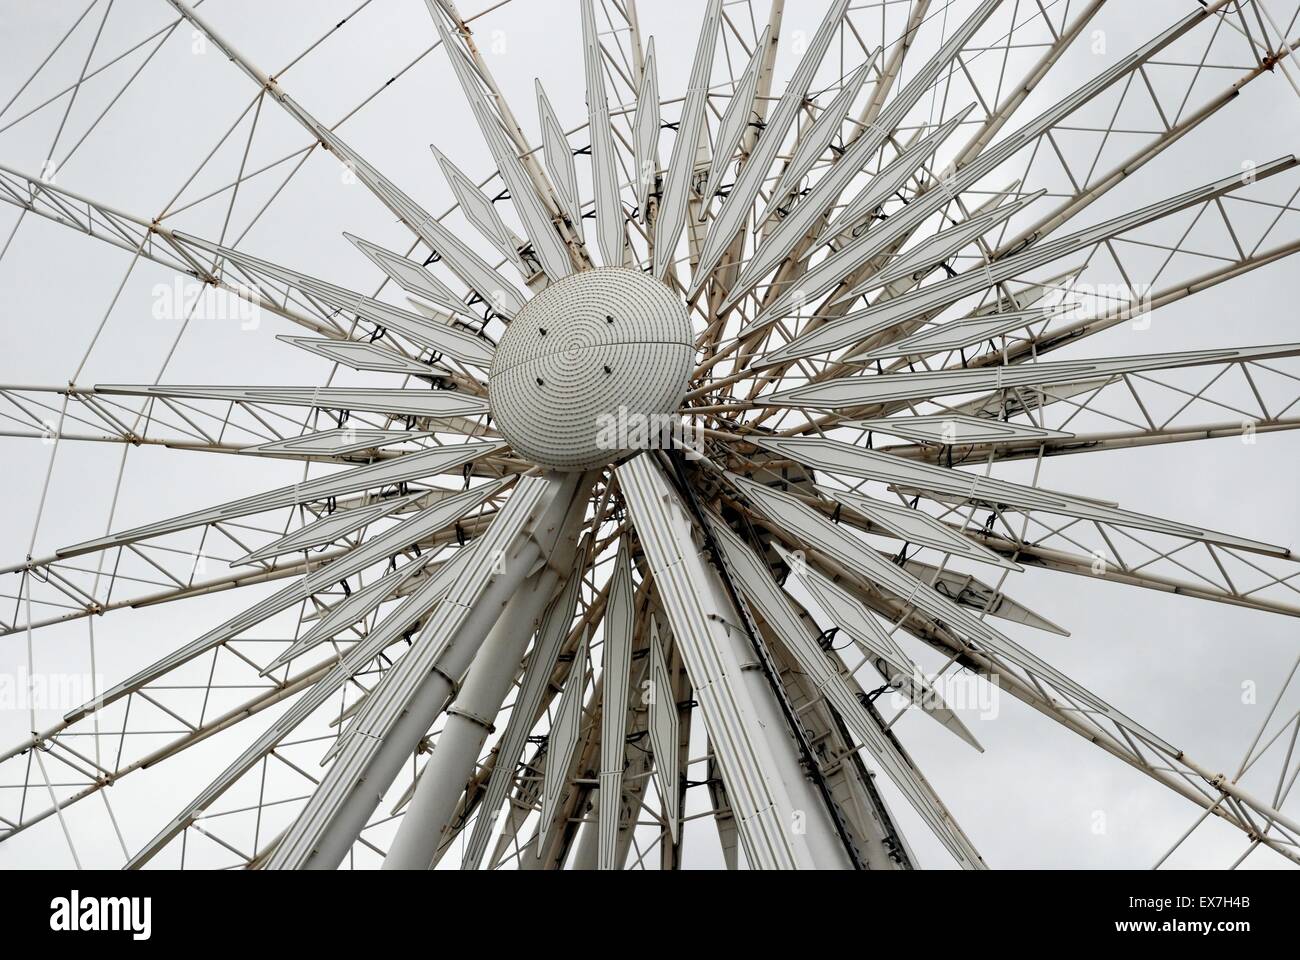 Freij Entertainment Ferris wheel, Keel Wharf, Liverpool Stock Photo